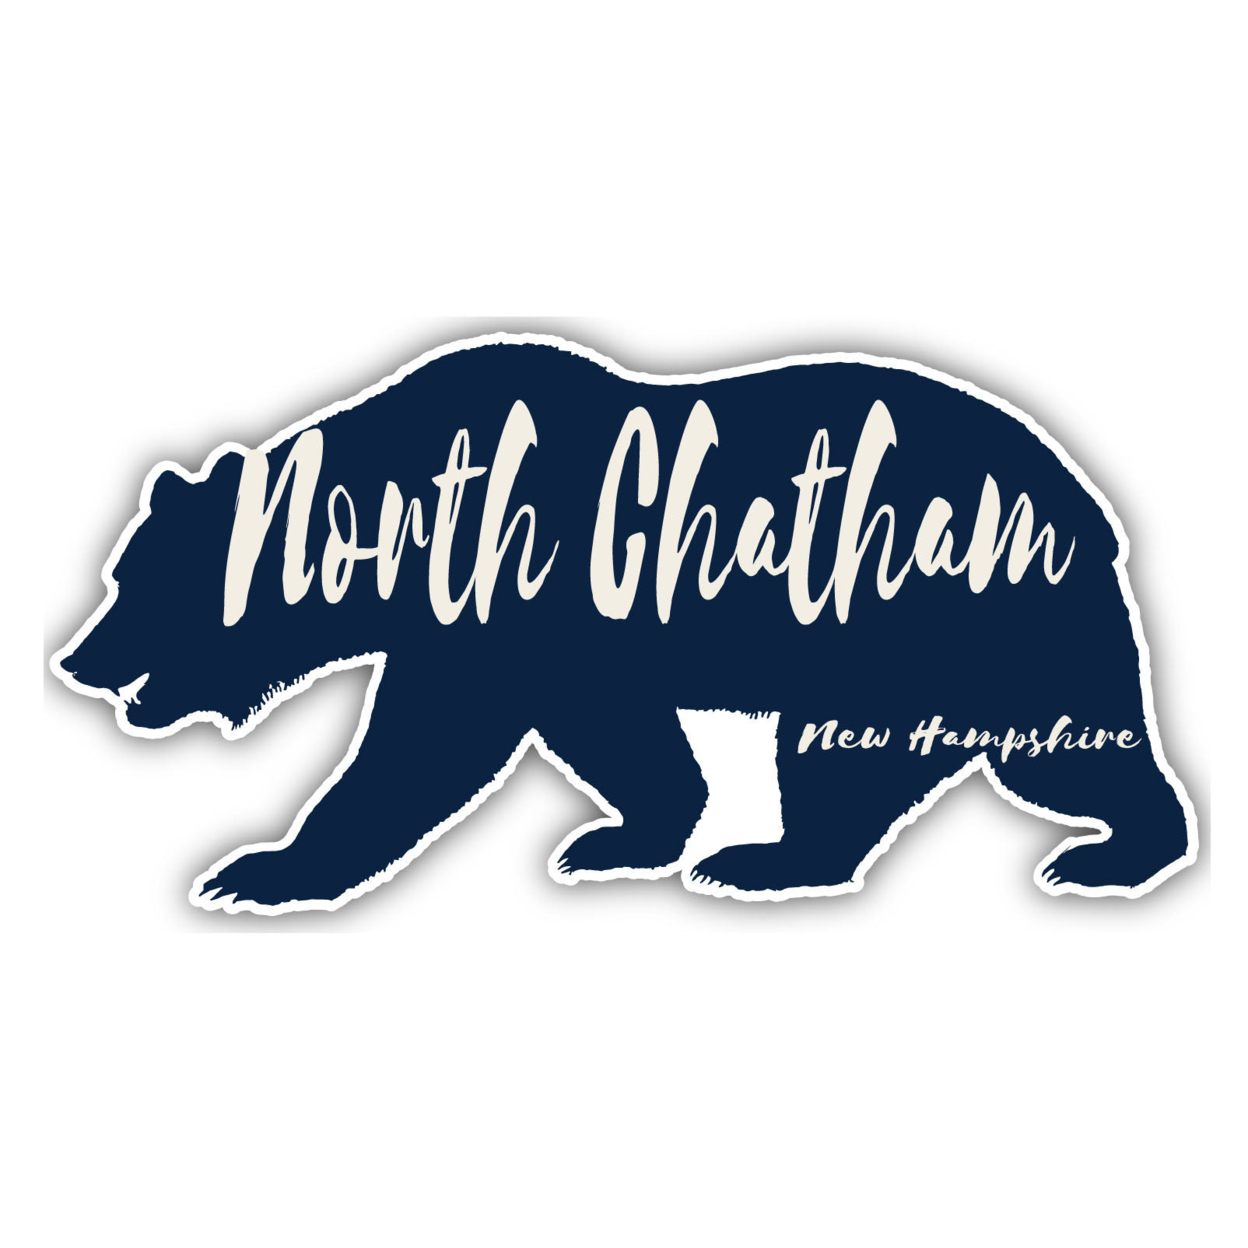 North Chatham New Hampshire Souvenir Decorative Stickers (Choose Theme And Size) - Single Unit, 4-Inch, Bear